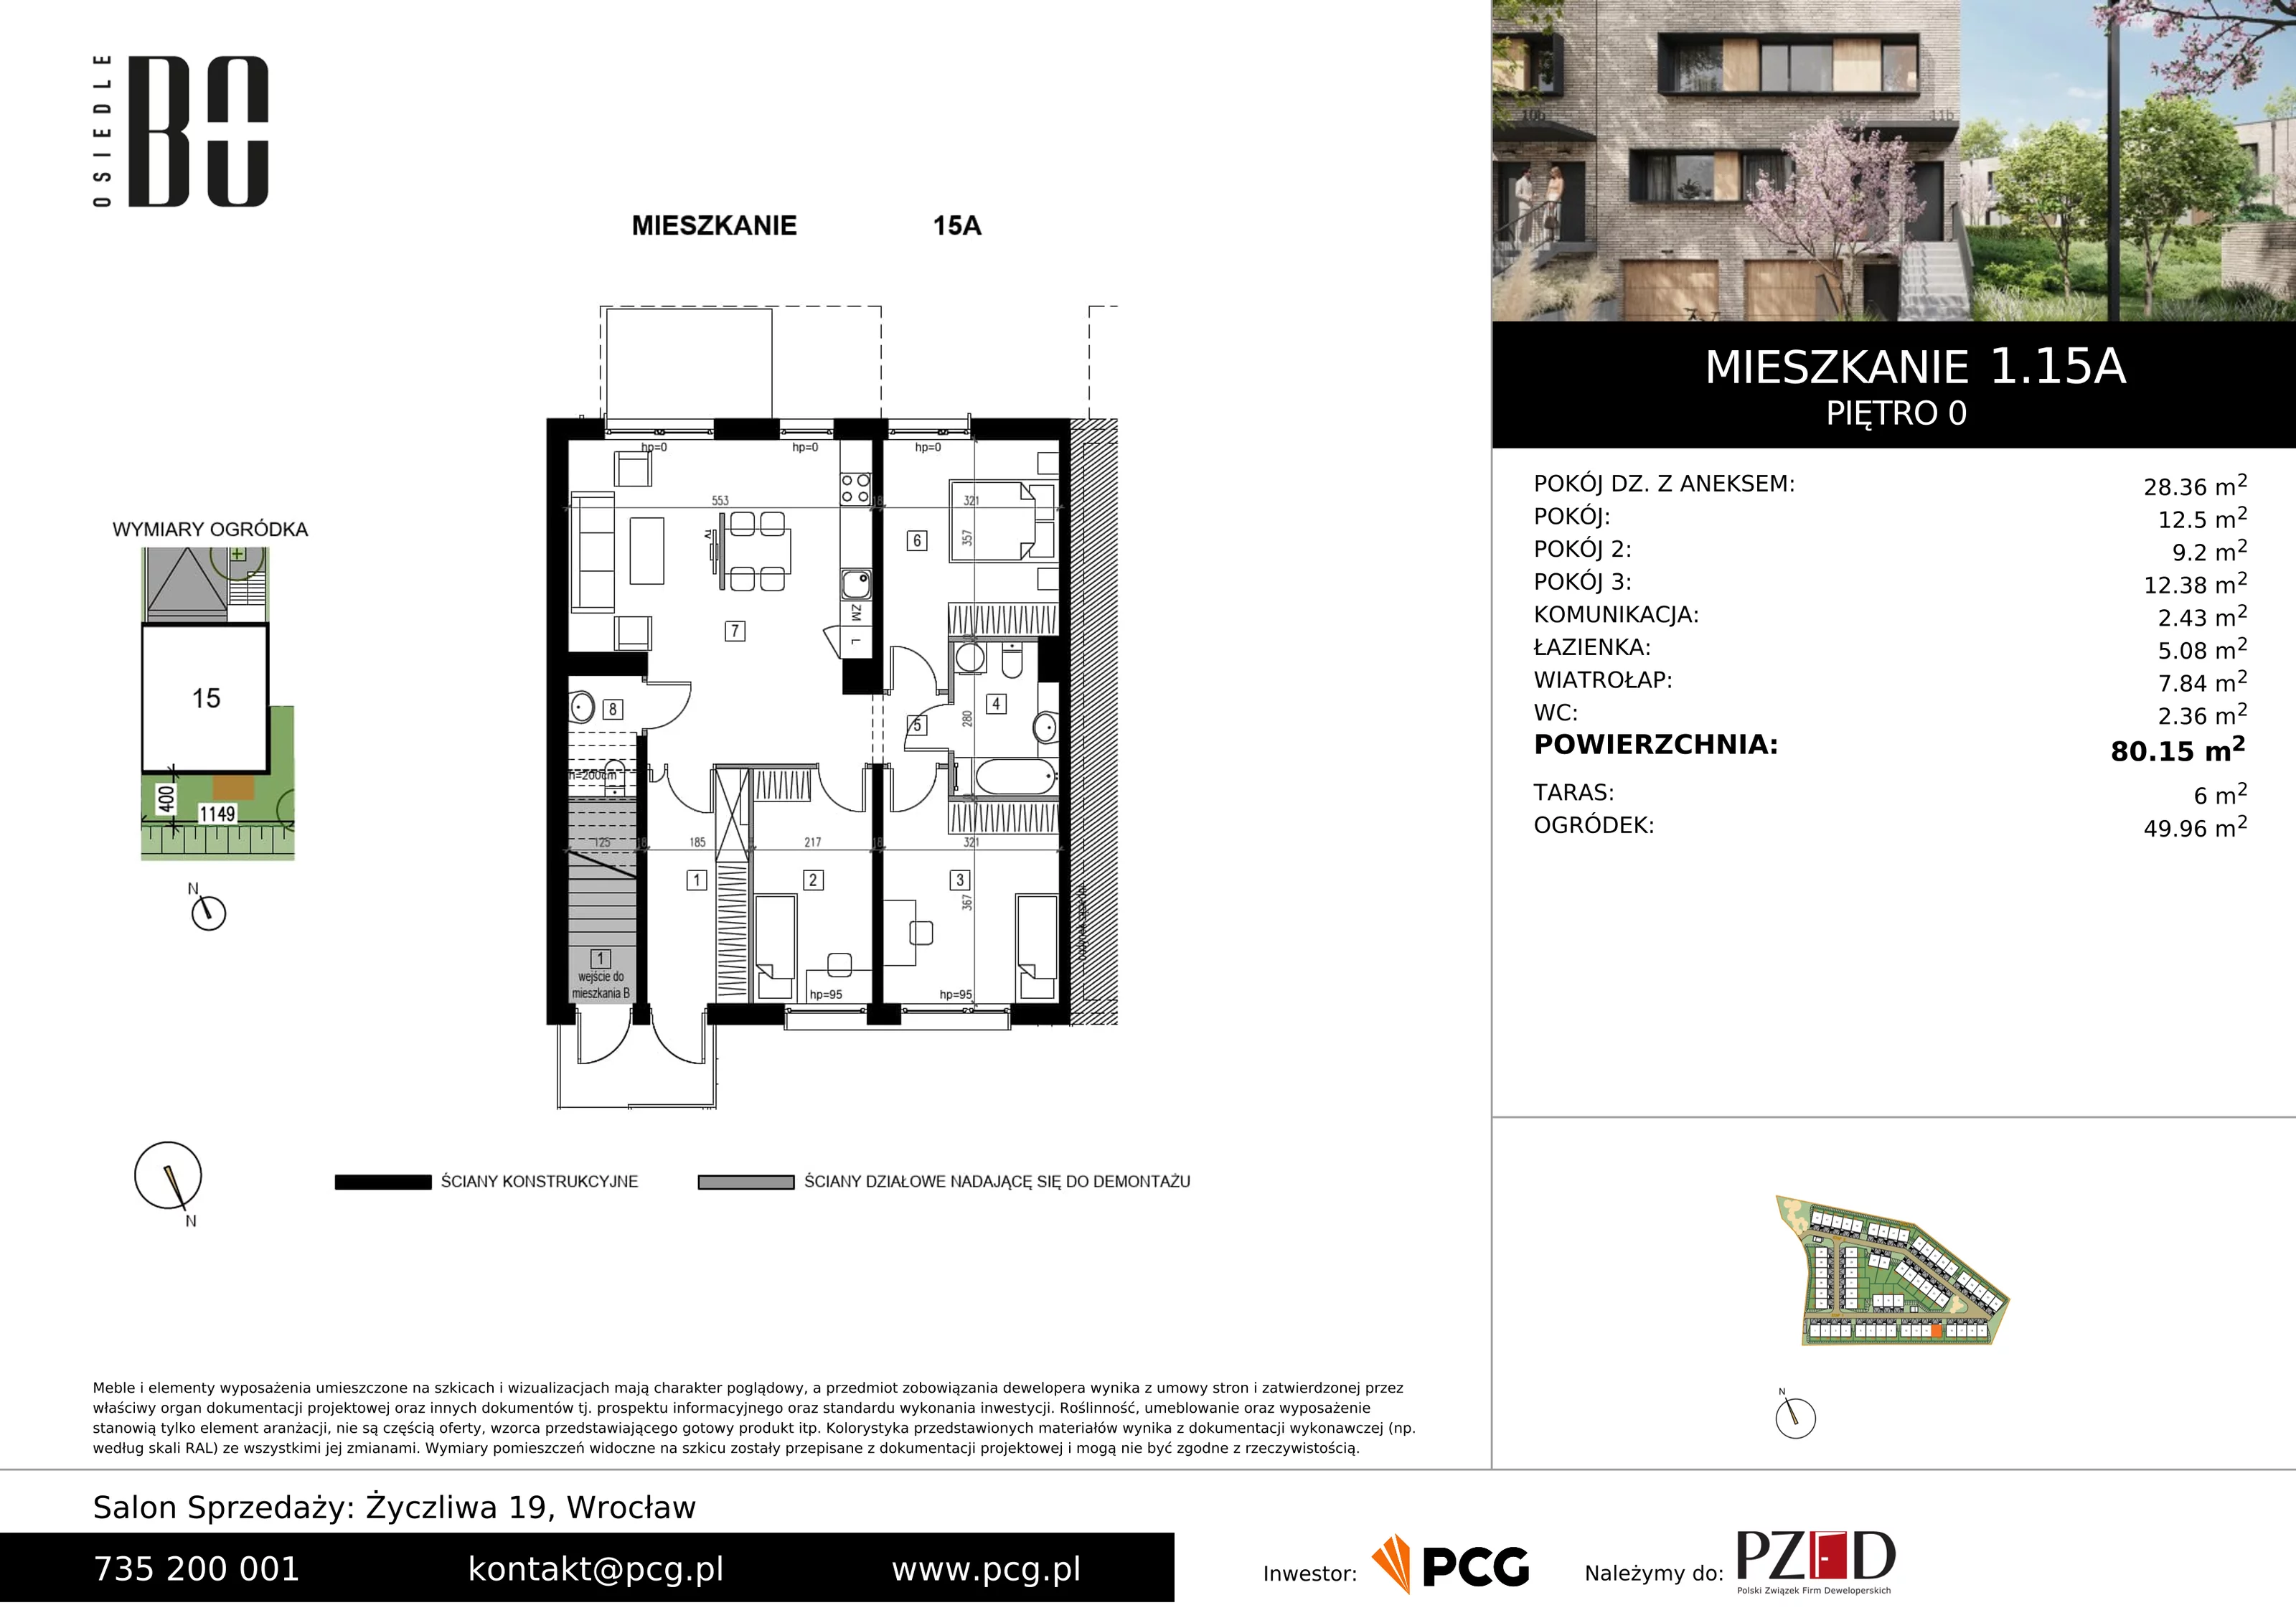 Apartament 80,15 m², parter, oferta nr 1.15A, Osiedle BO, Wrocław, Kowale, ul. Bociana